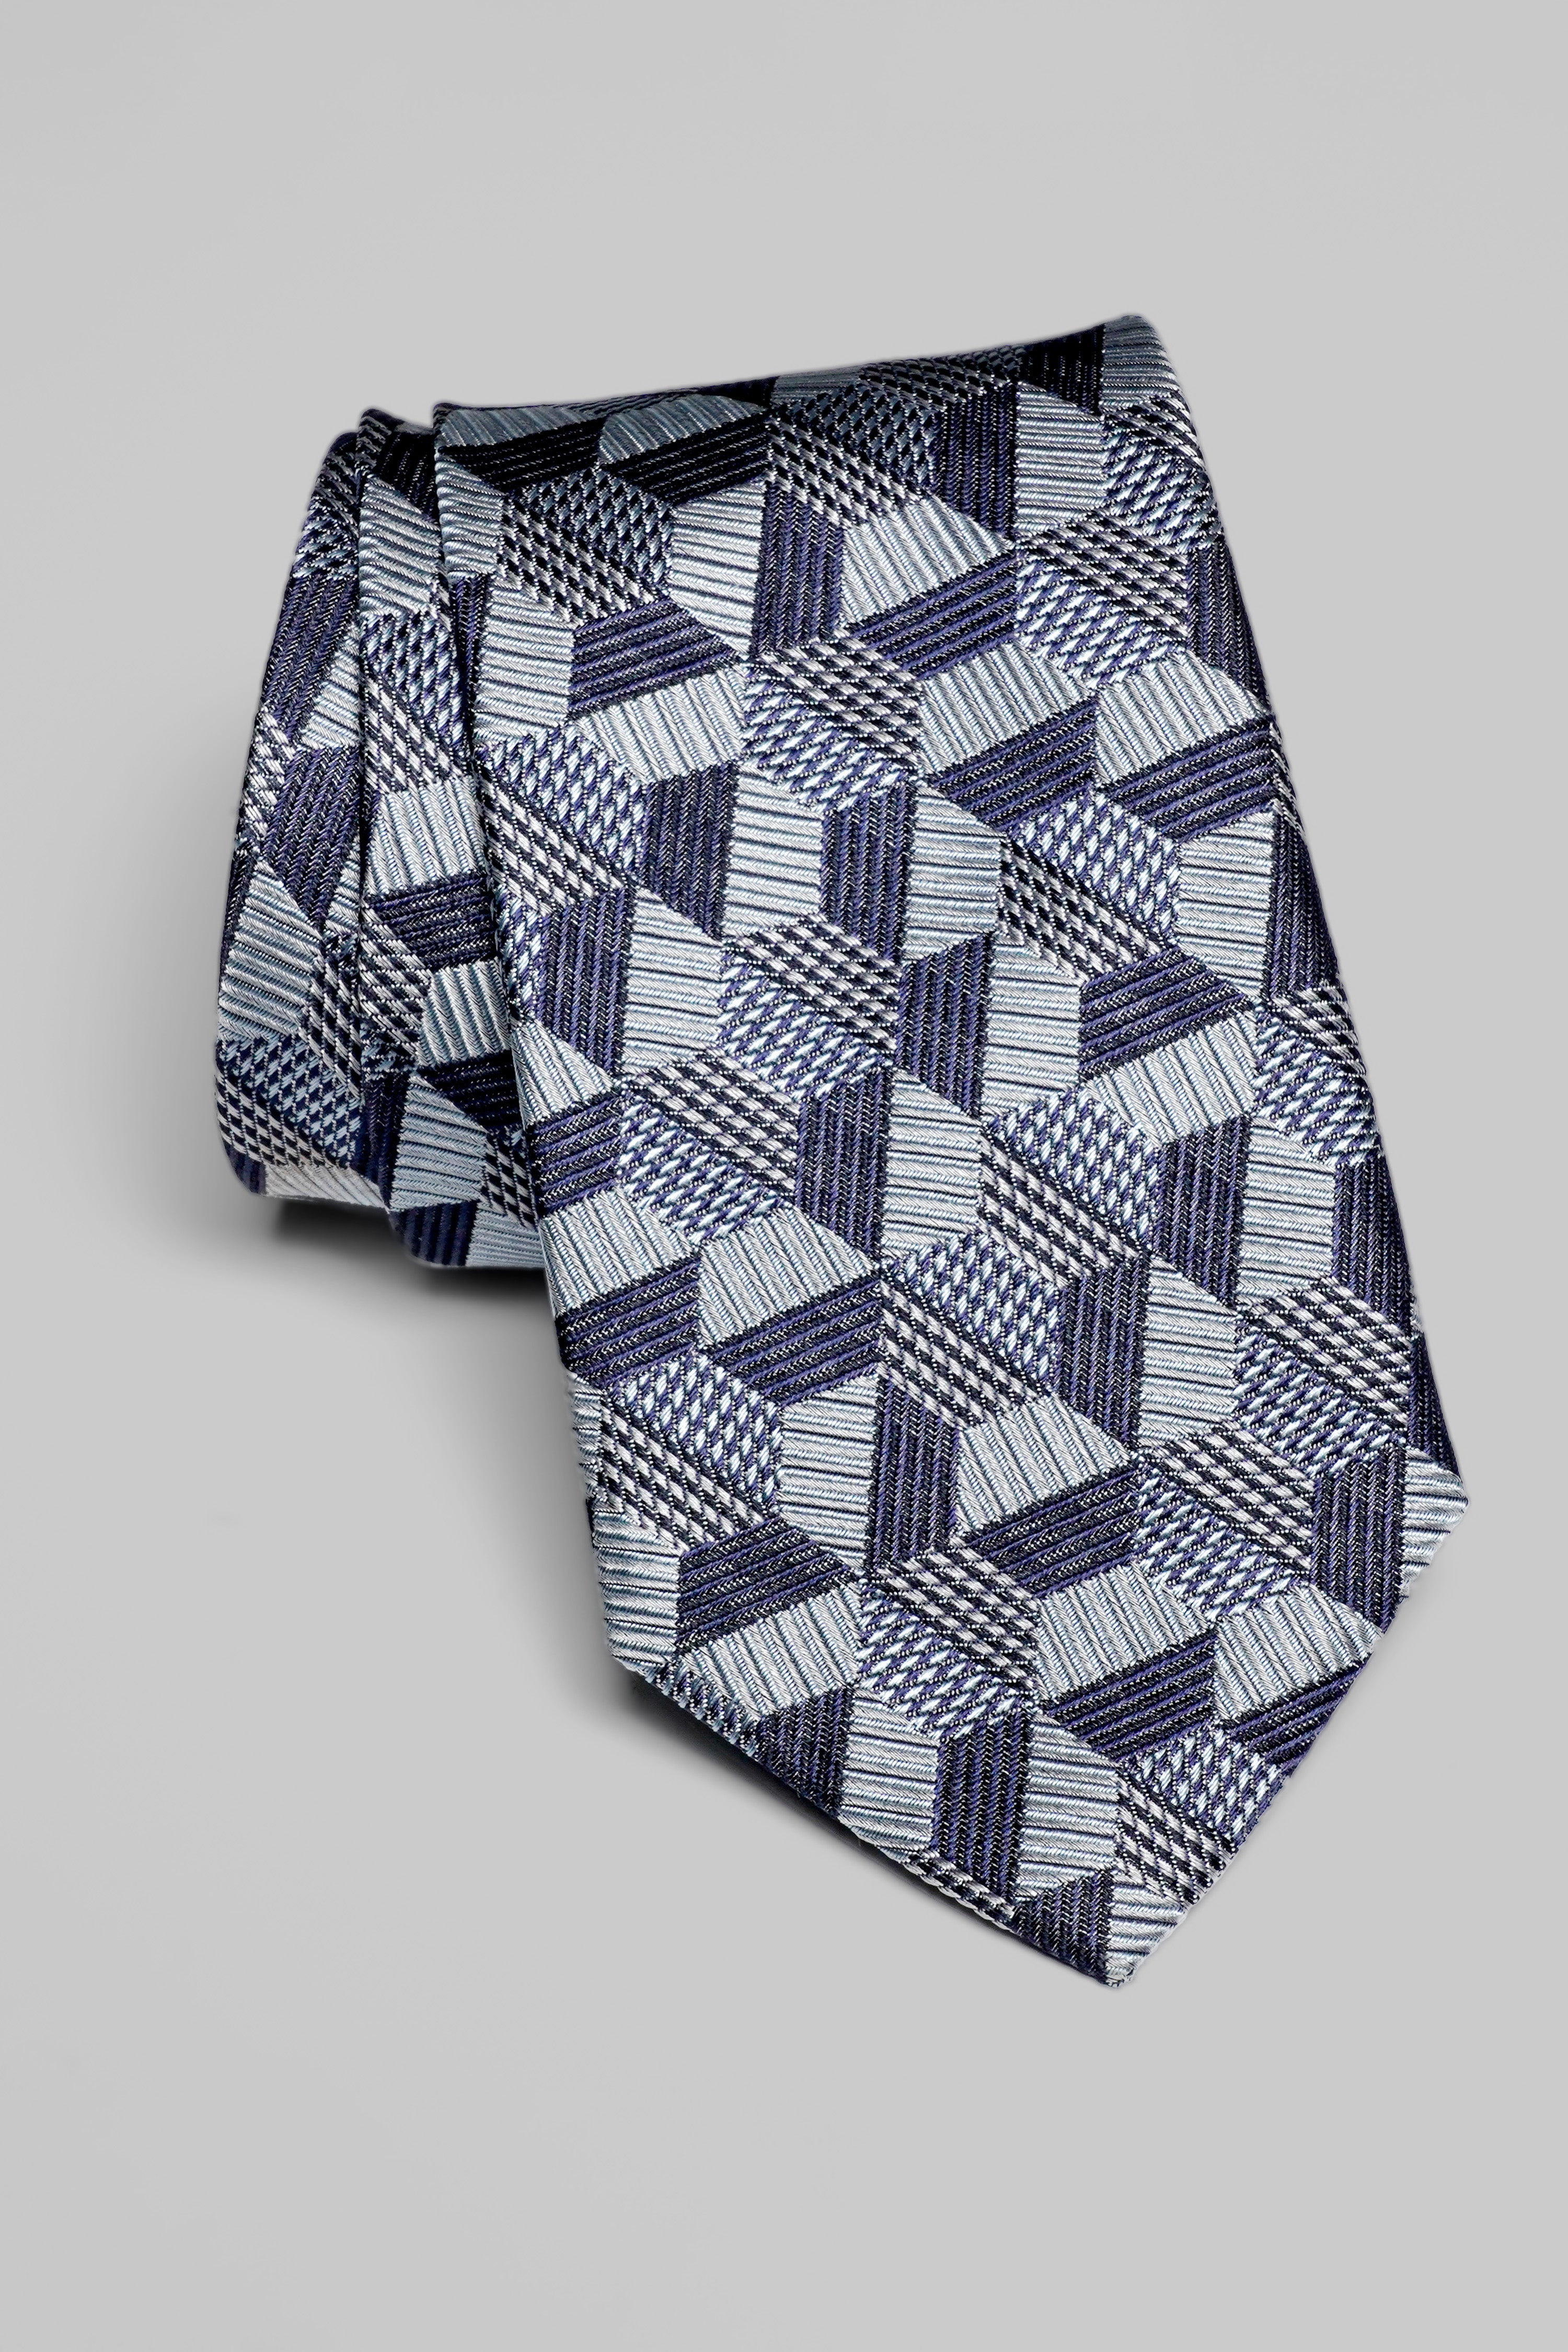 Vue alternative Holton cravate tissée en bleu